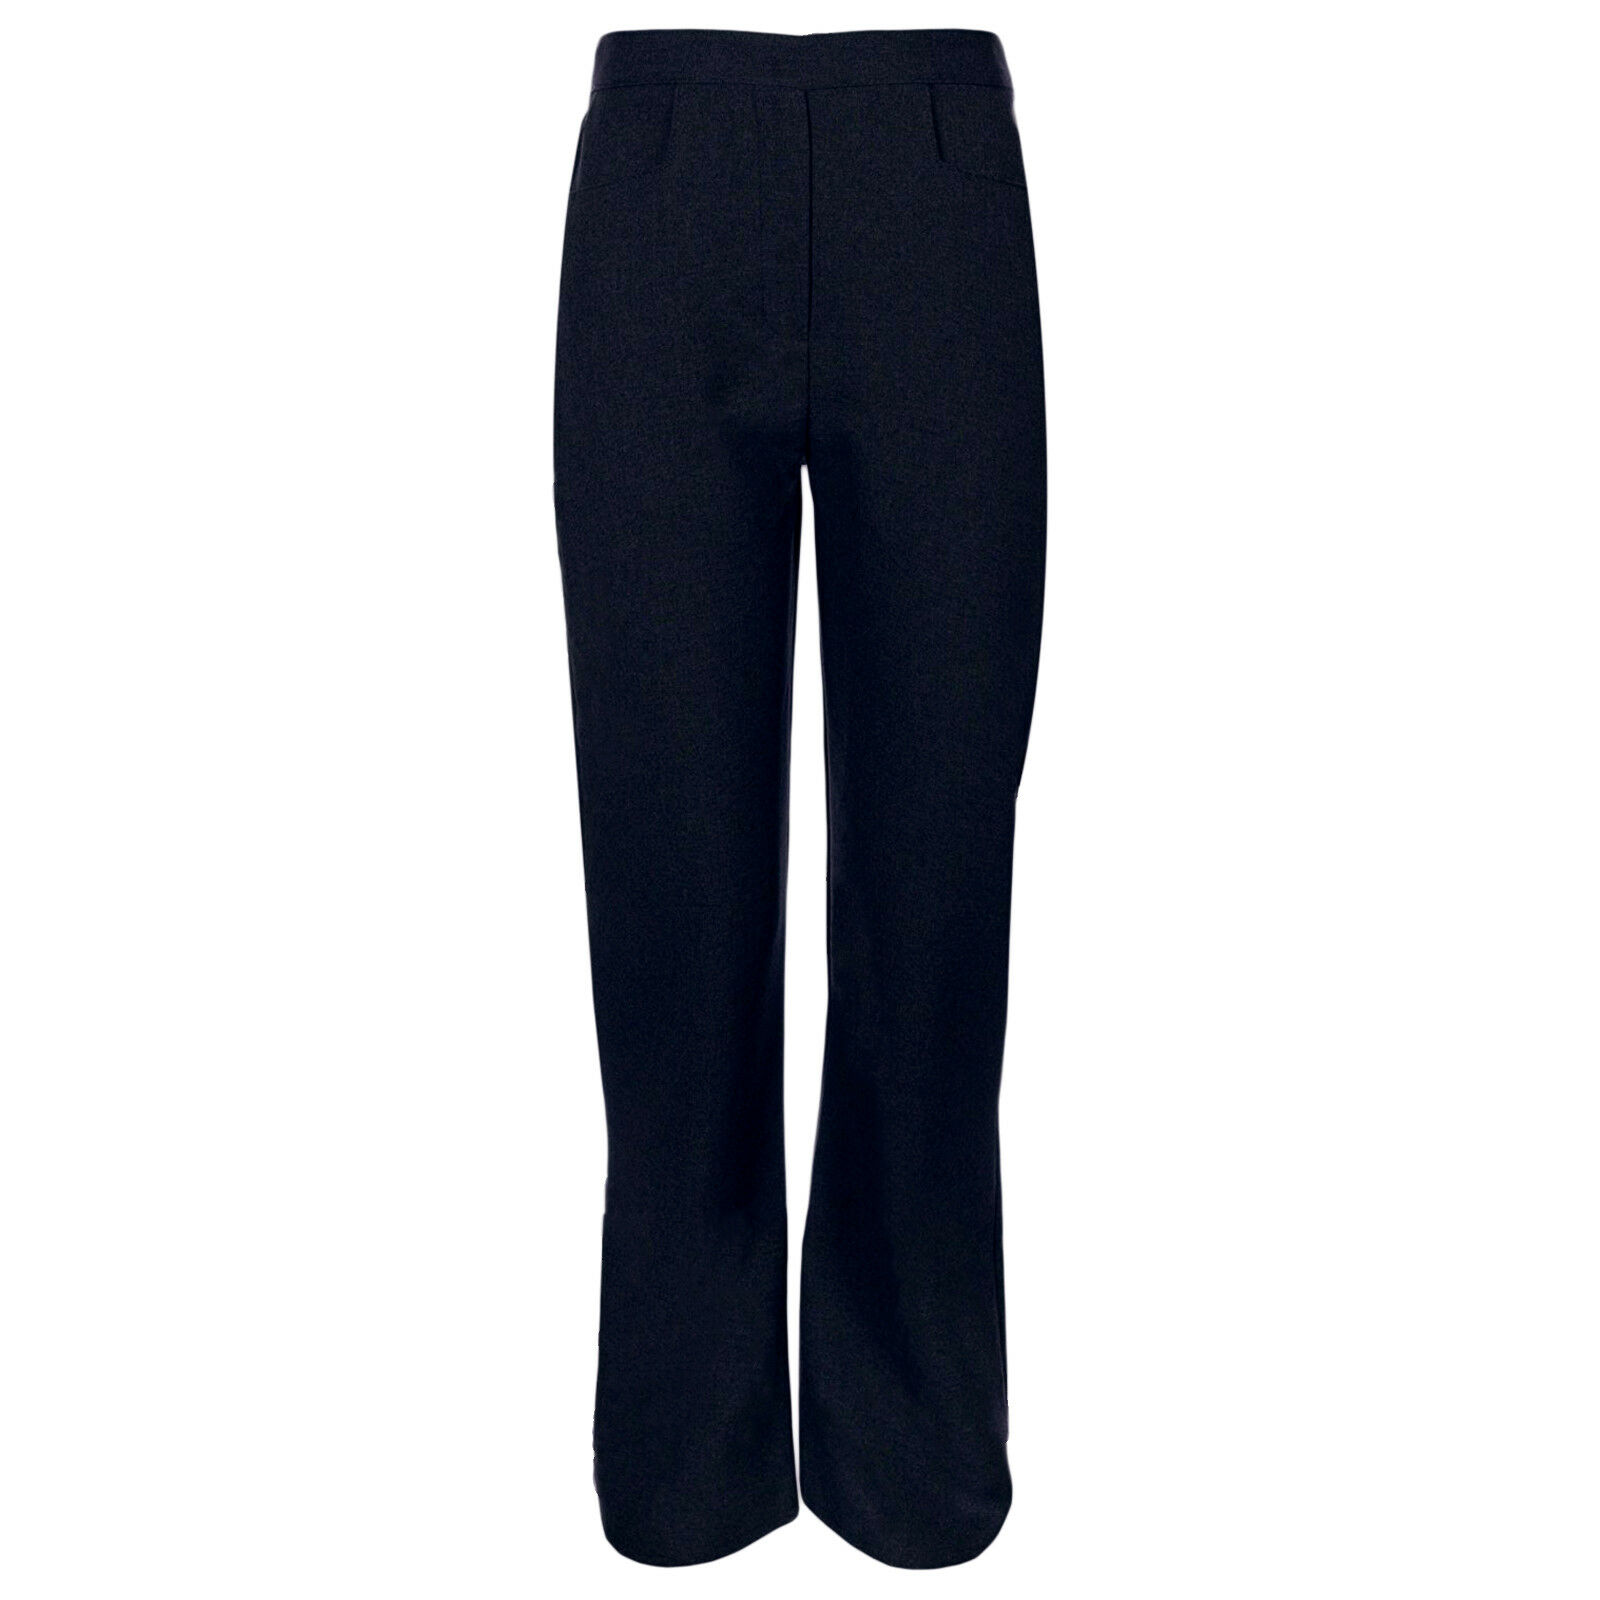 Trousers, pattern №885 buy on-line